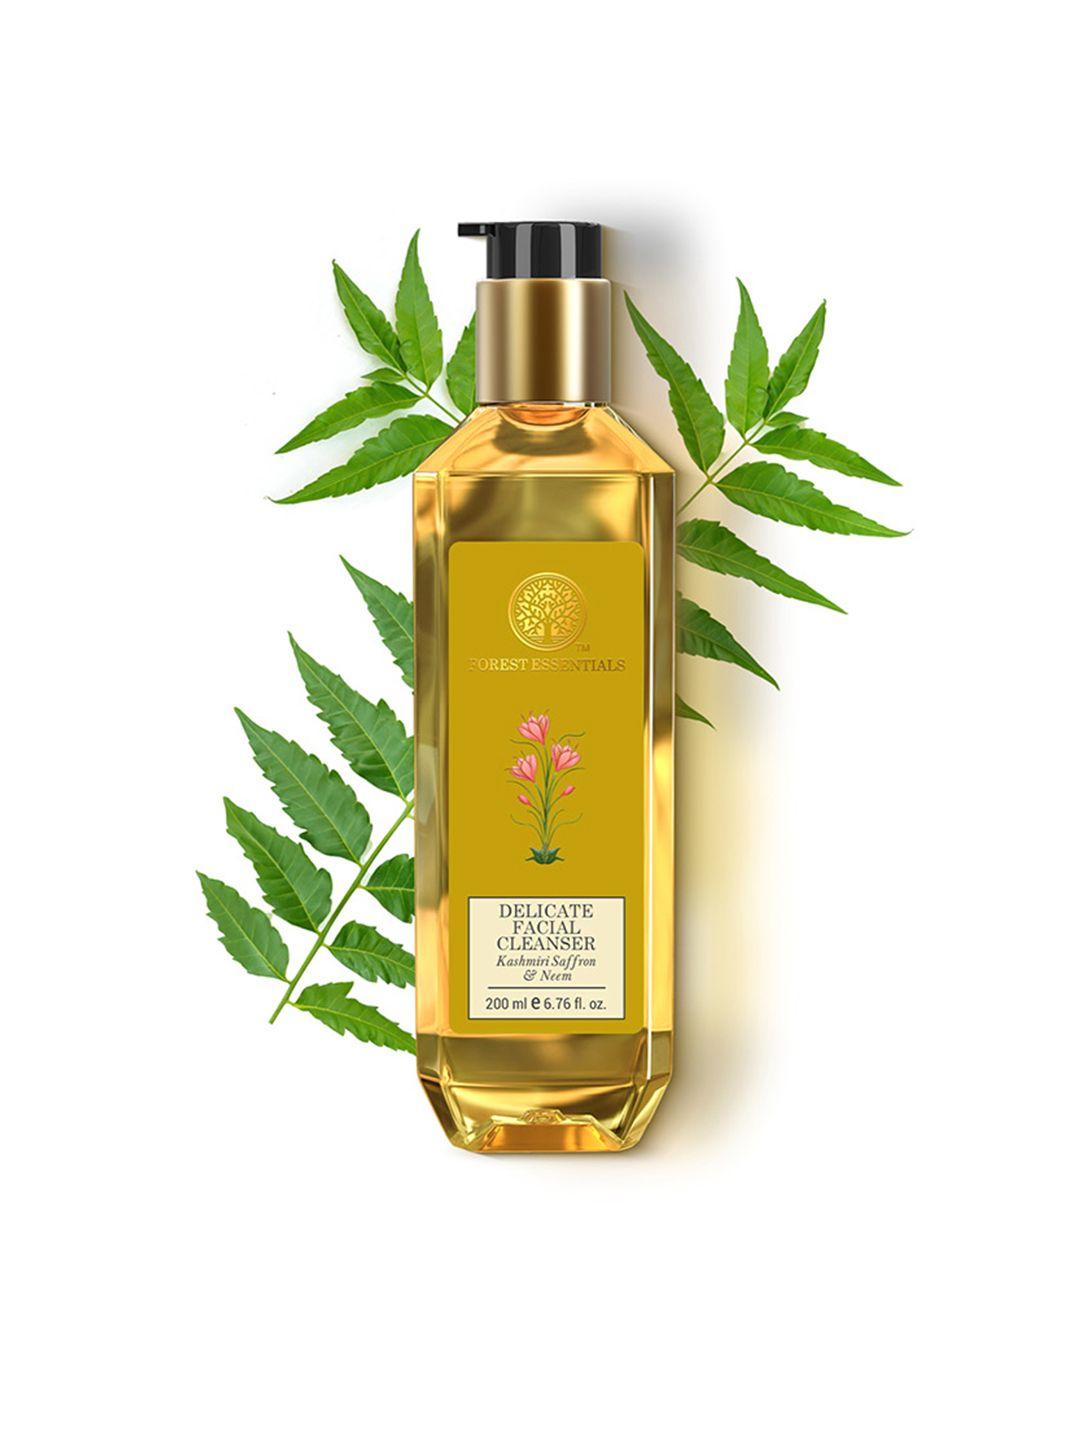 forest essentials delicate facial cleanser kashmiri saffron & neem for oily skin - 200ml